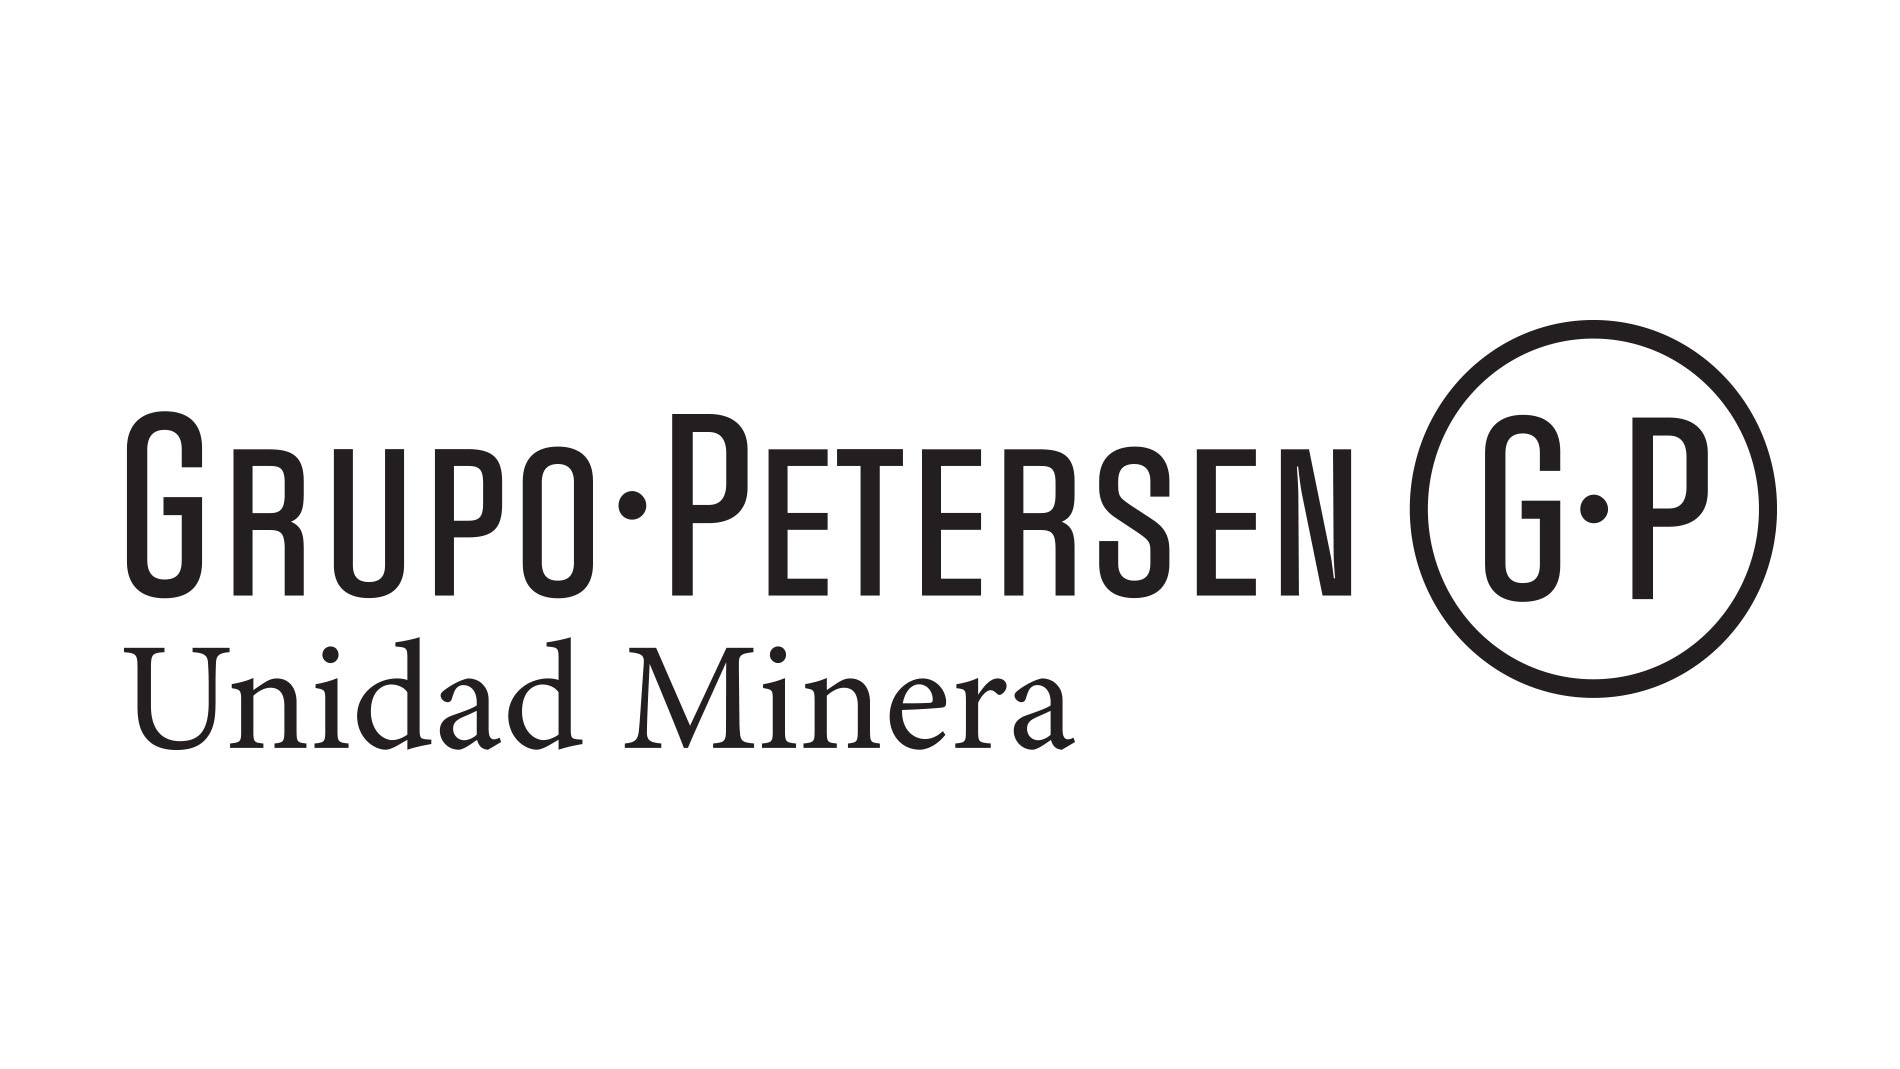 Grupo Petersen unidad minera